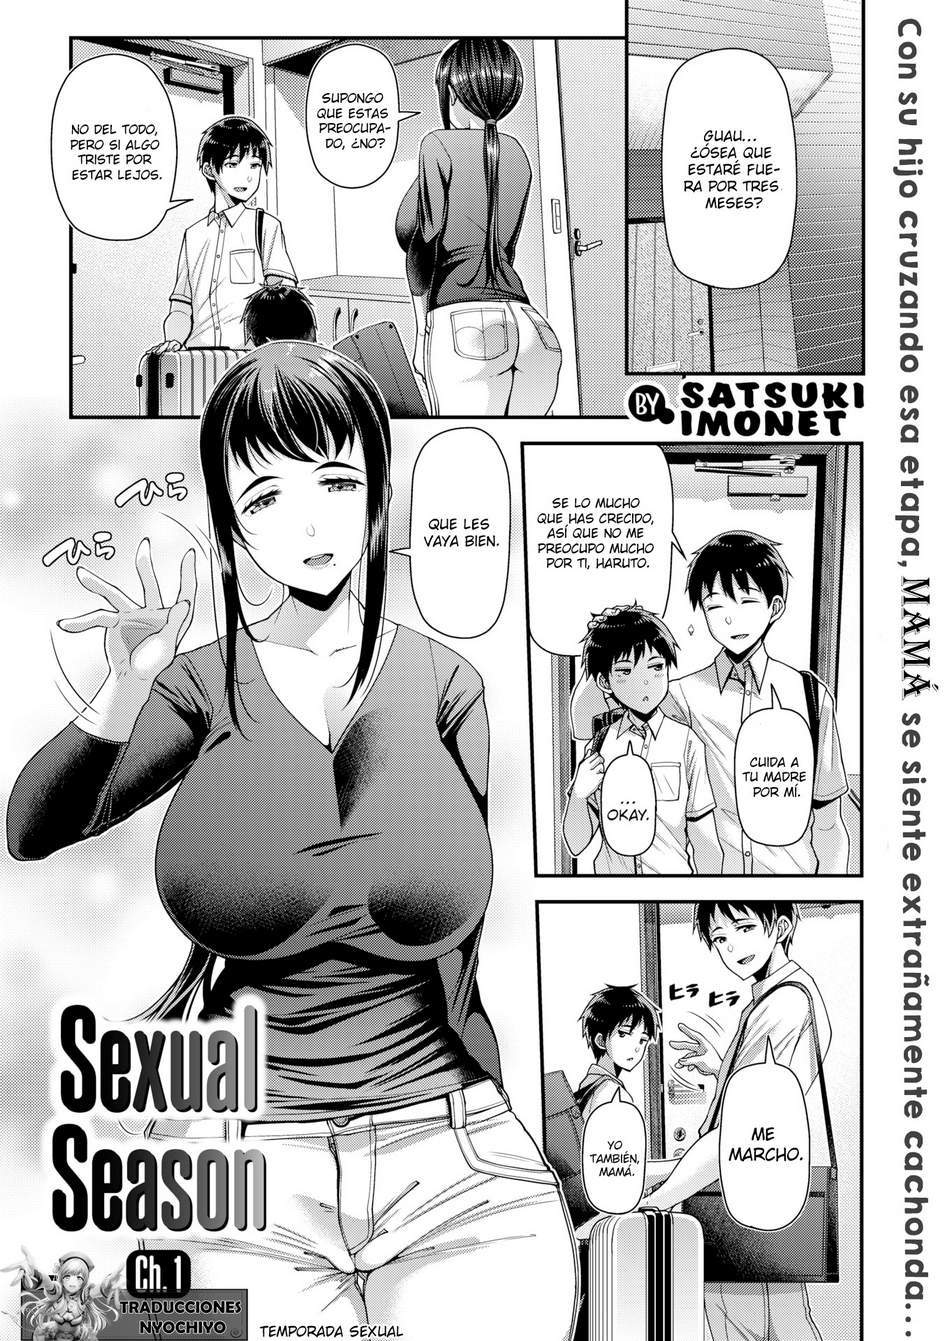 Sexual Season #1 - Page #1